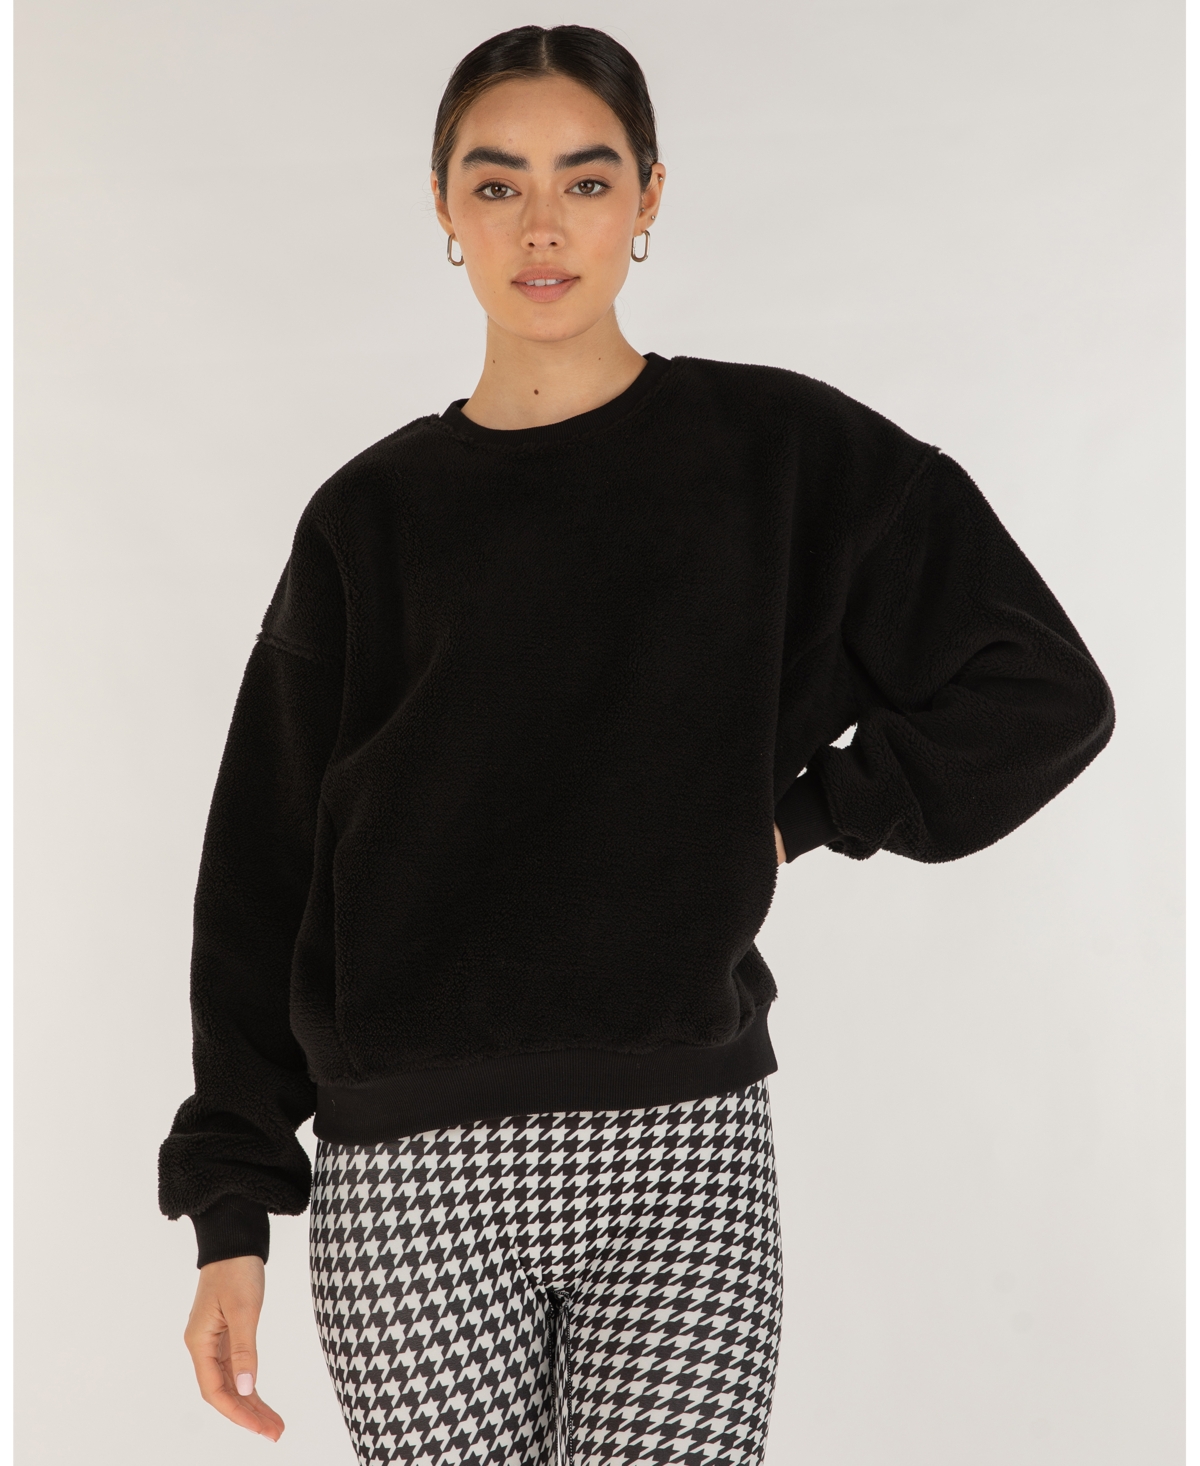  Teddy Sweatshirt Micro-Fleece Lined for Women